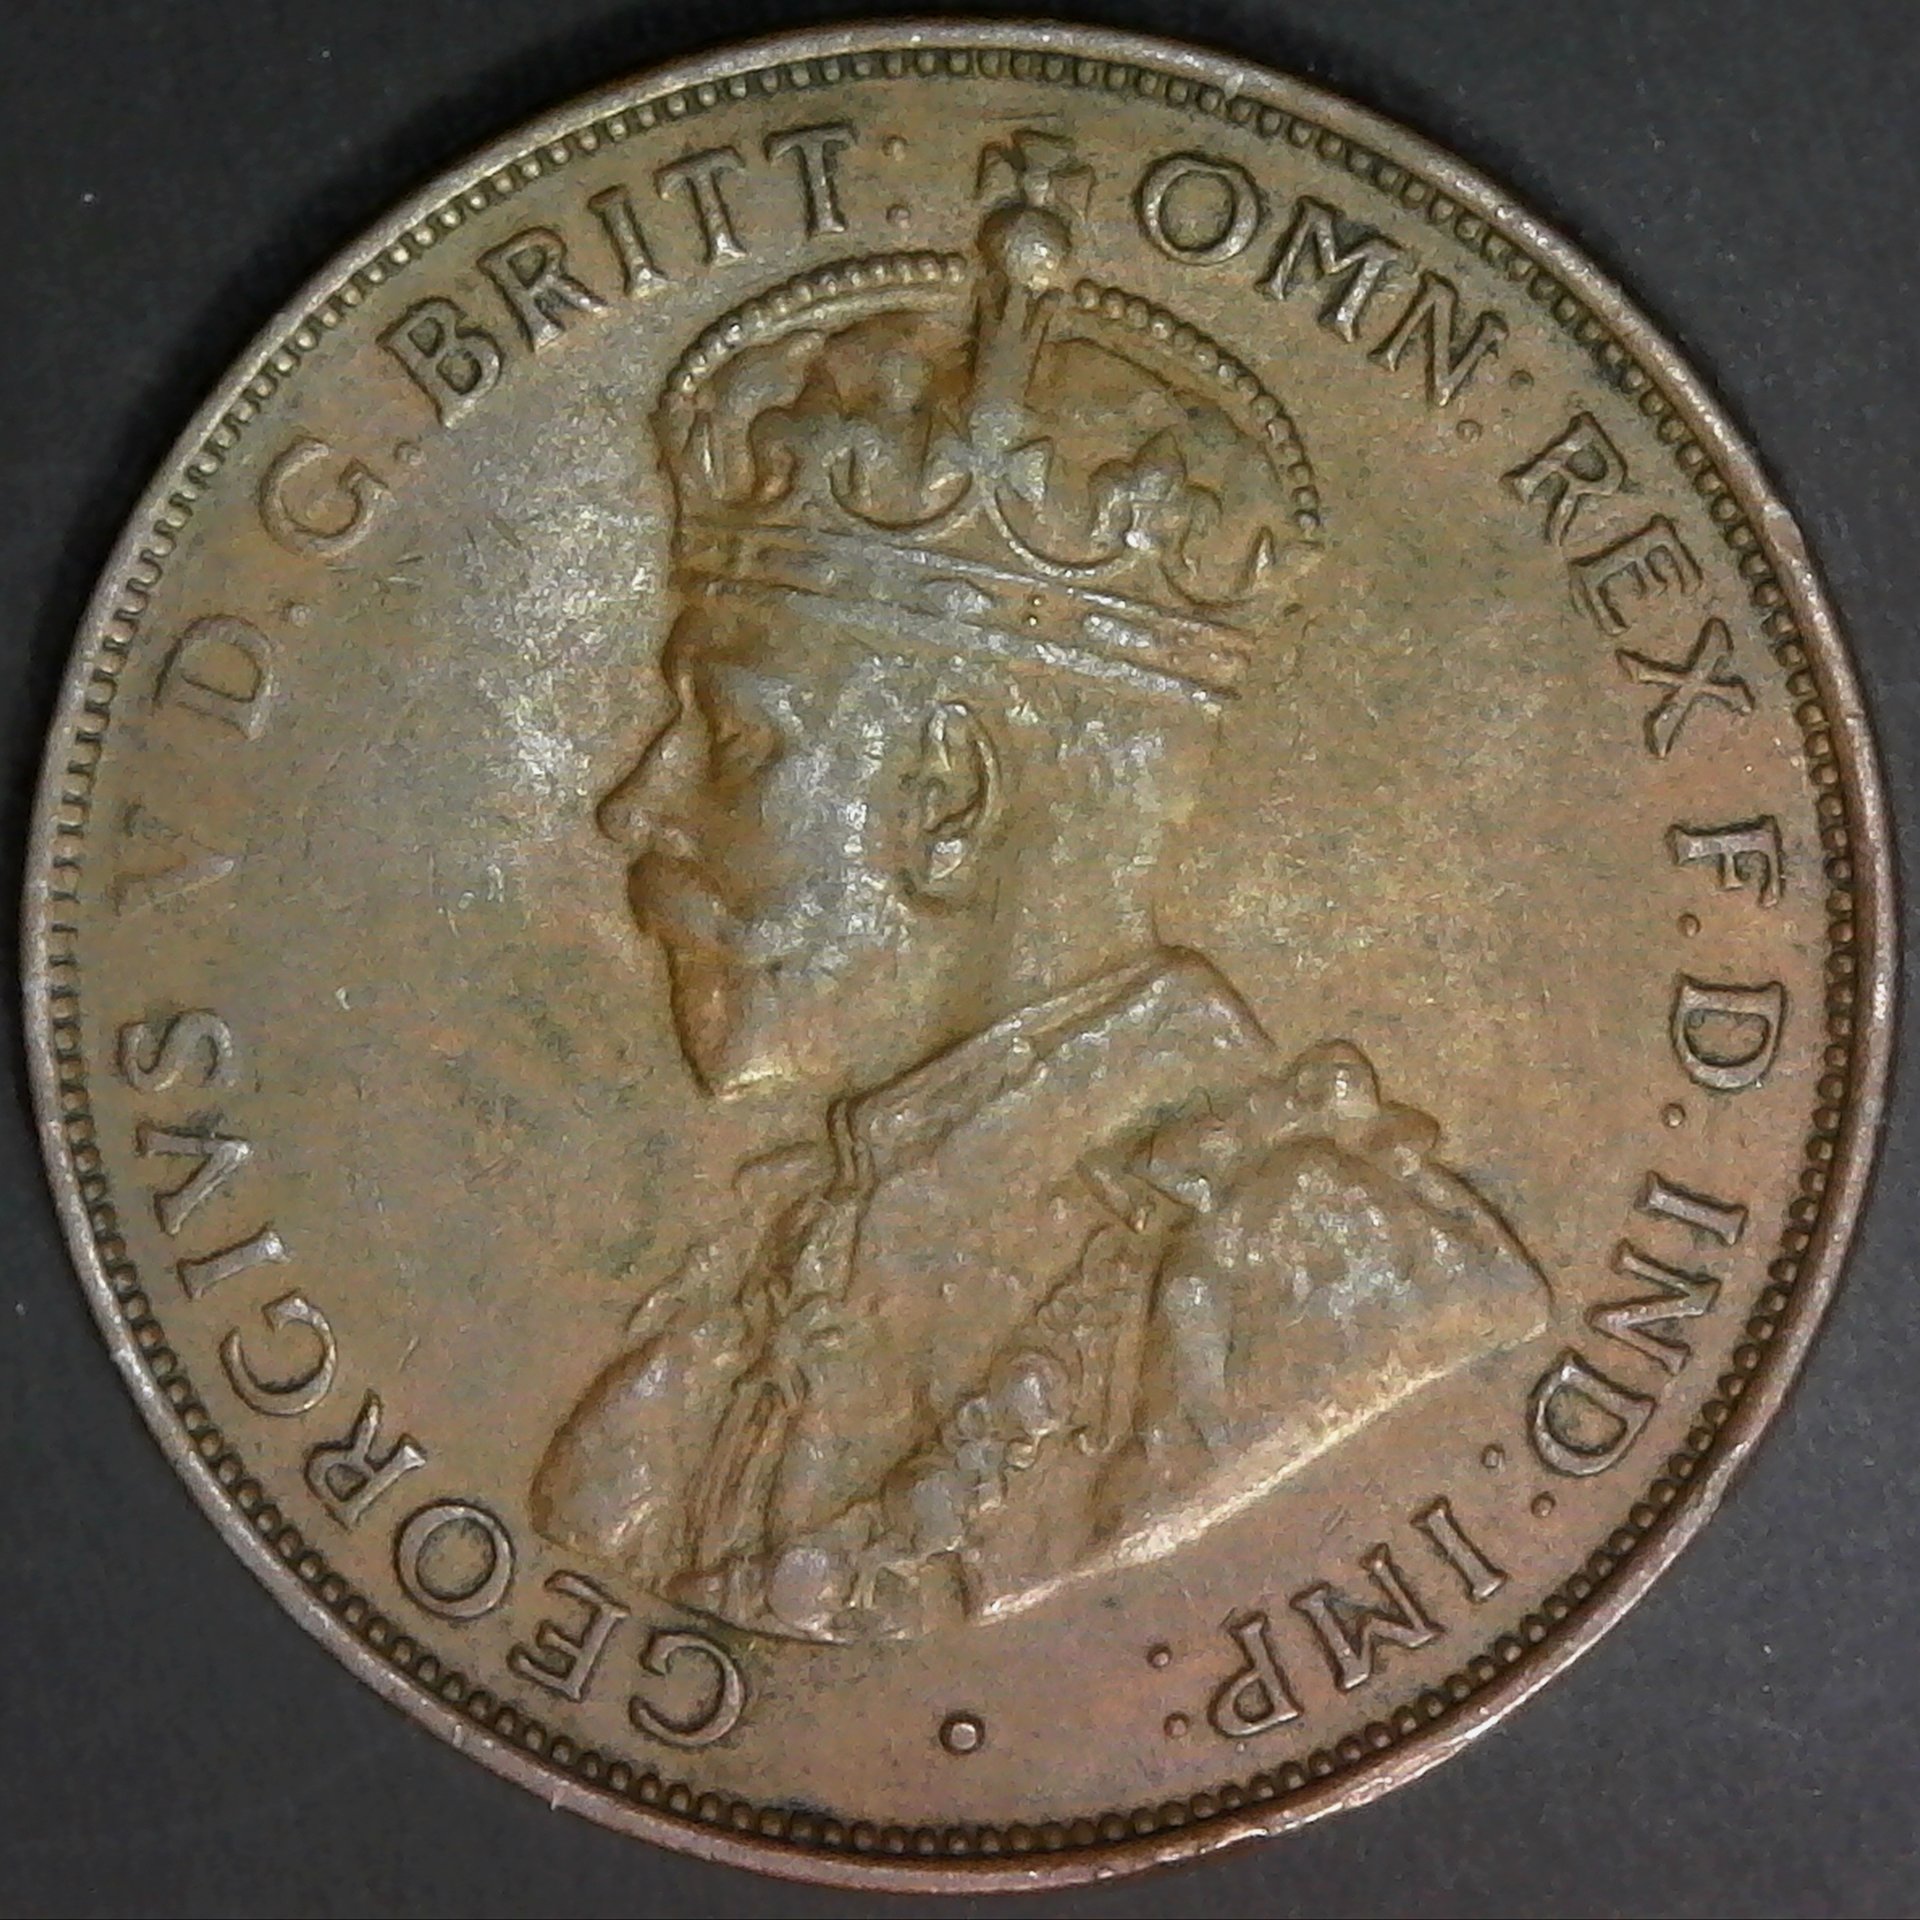 Australia One Penny 1935 obv.jpg